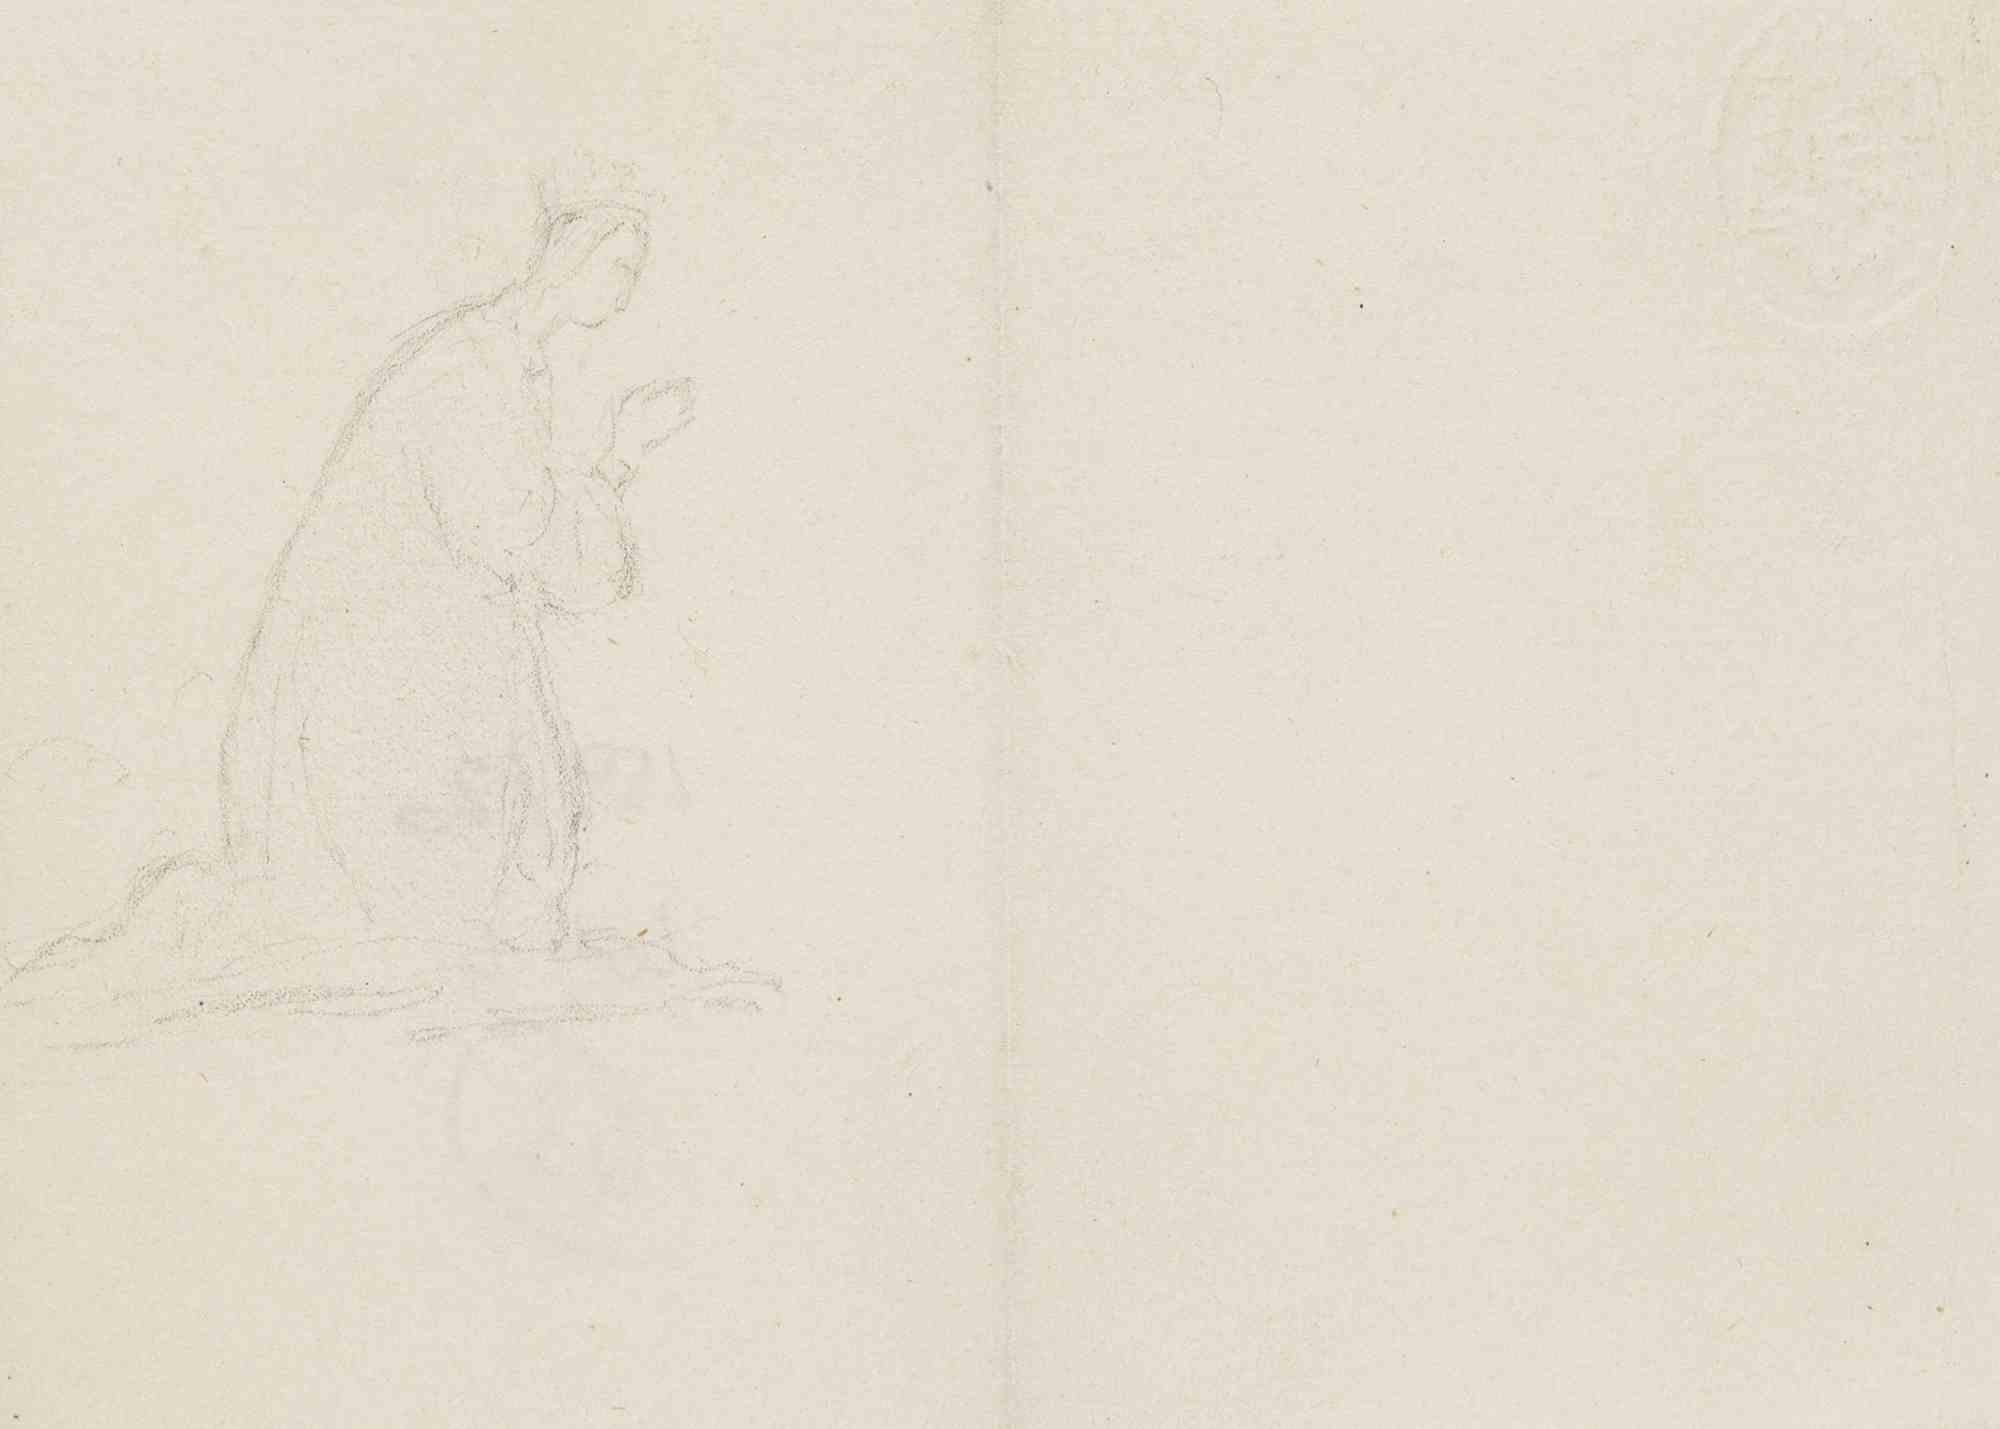 Unknown Figurative Art - Praying - Original Drawing - Early 20th Century